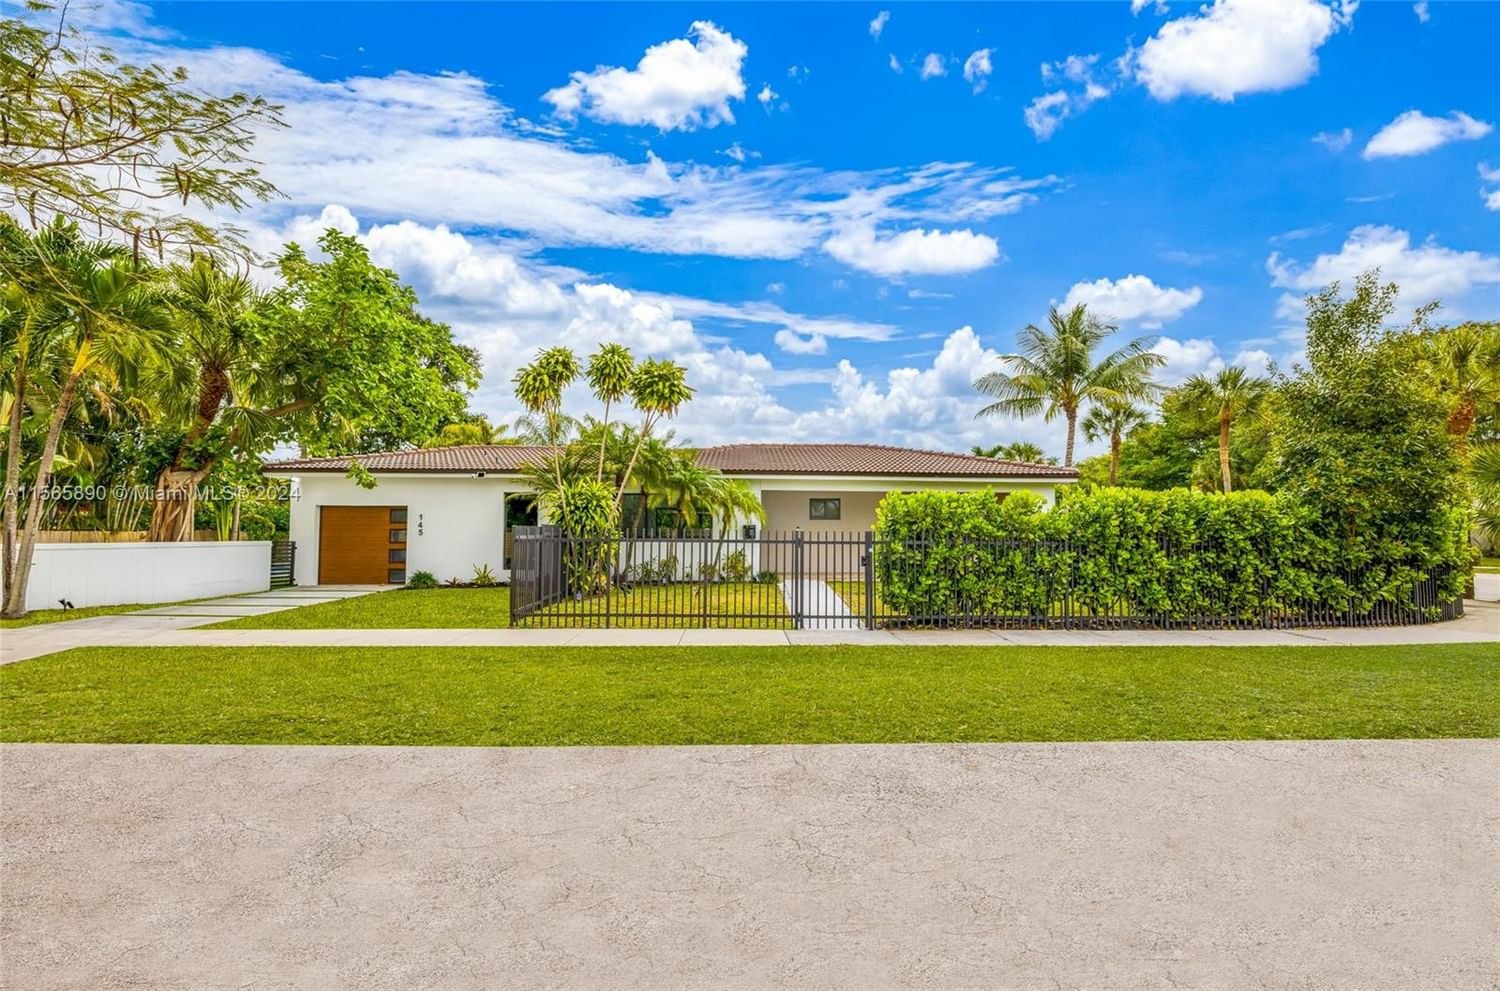 Real estate property located at 145 95th St, Miami-Dade County, BONMAR PK A SUB, Miami Shores, FL